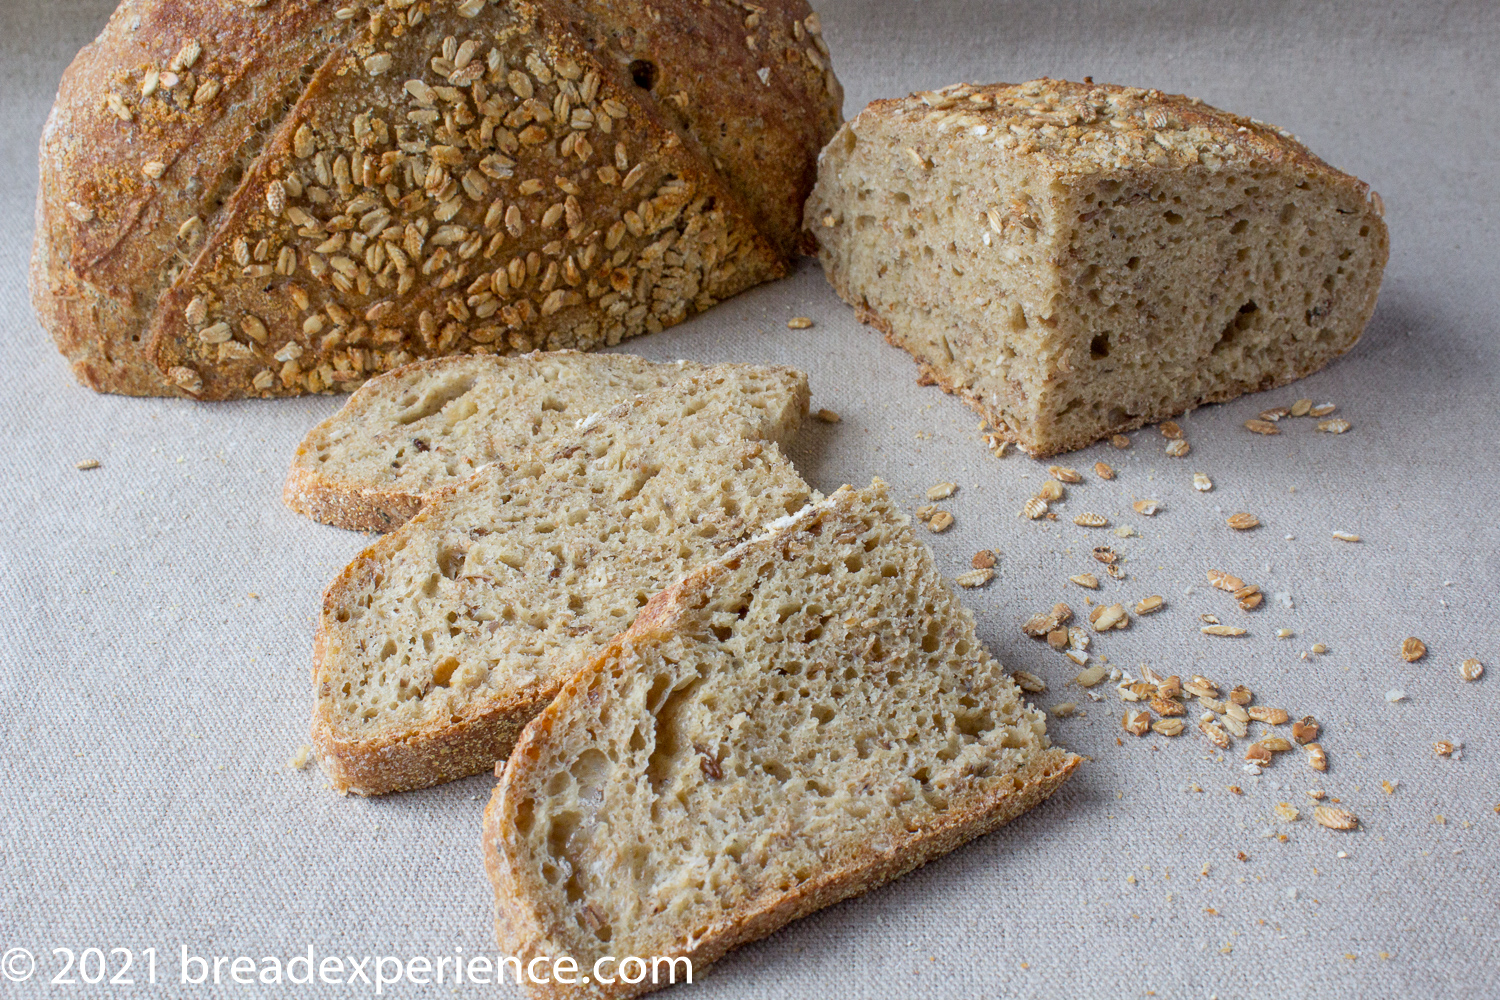 Crumb shot of Einkorn Toasted Oats Bread